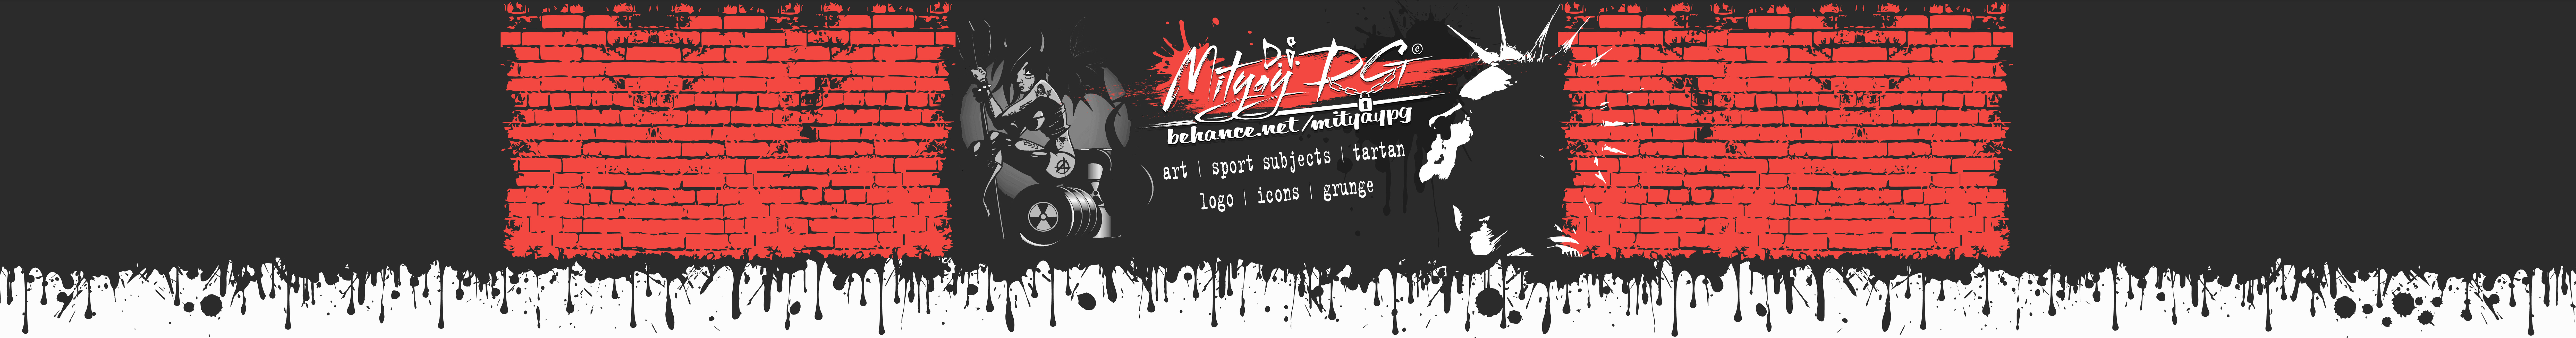 Mityay PG's profile banner